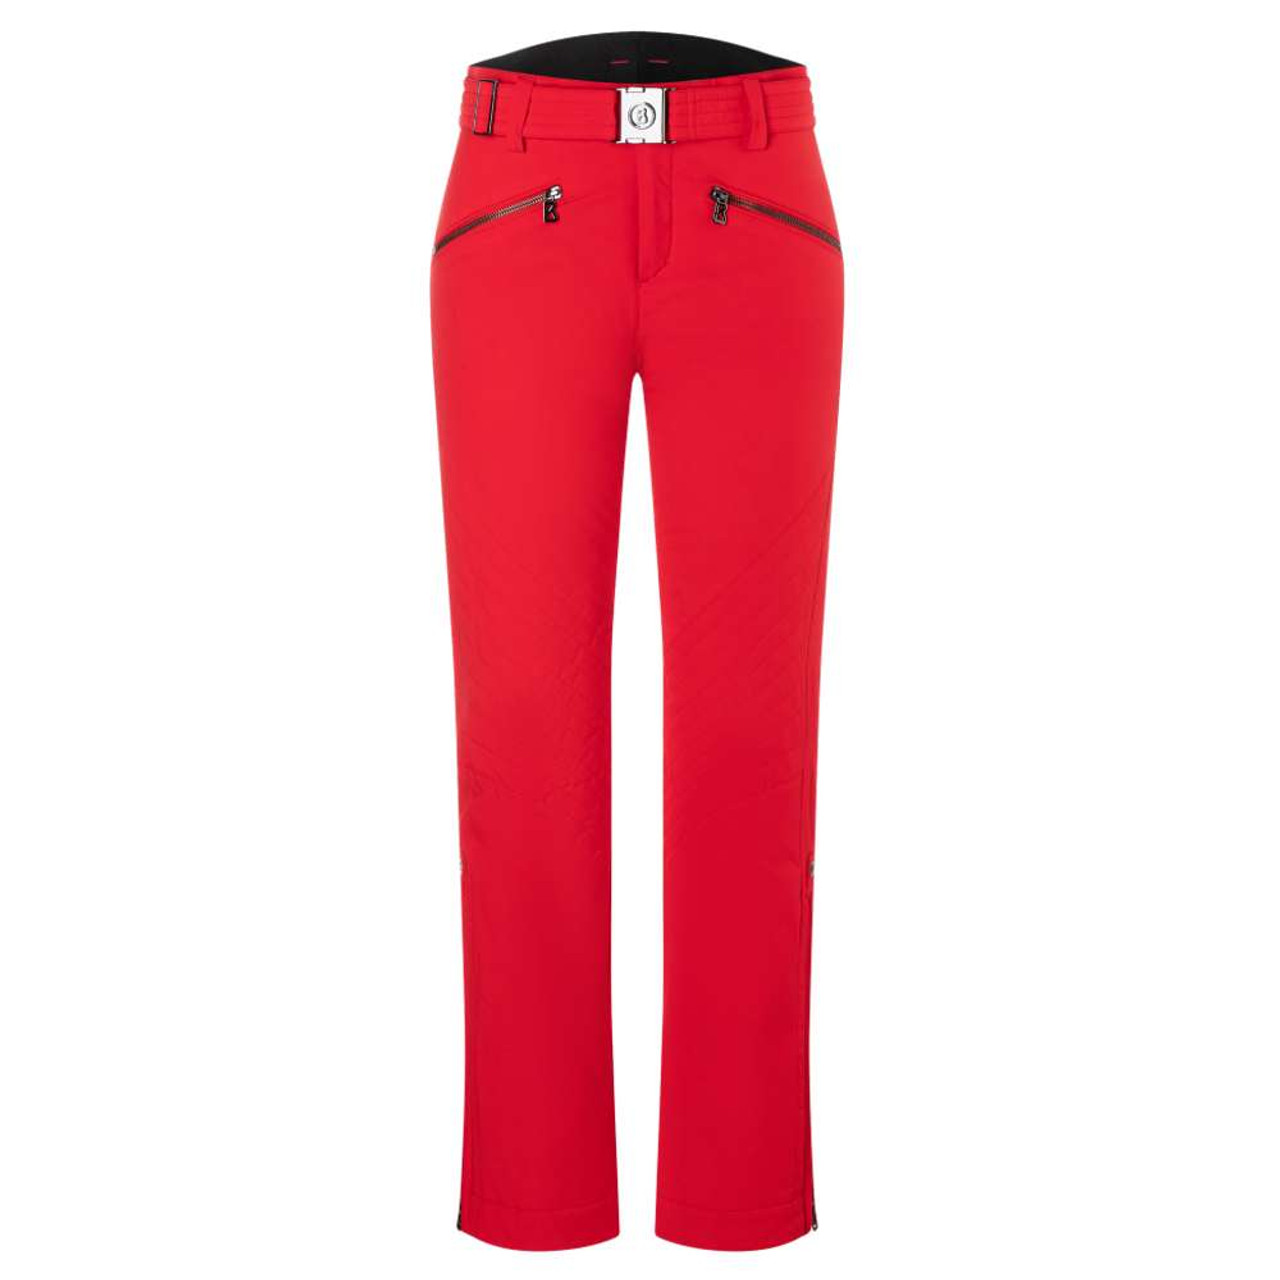 Bogner Fraenzi Women's Ski Pants; Clothes to Perfection